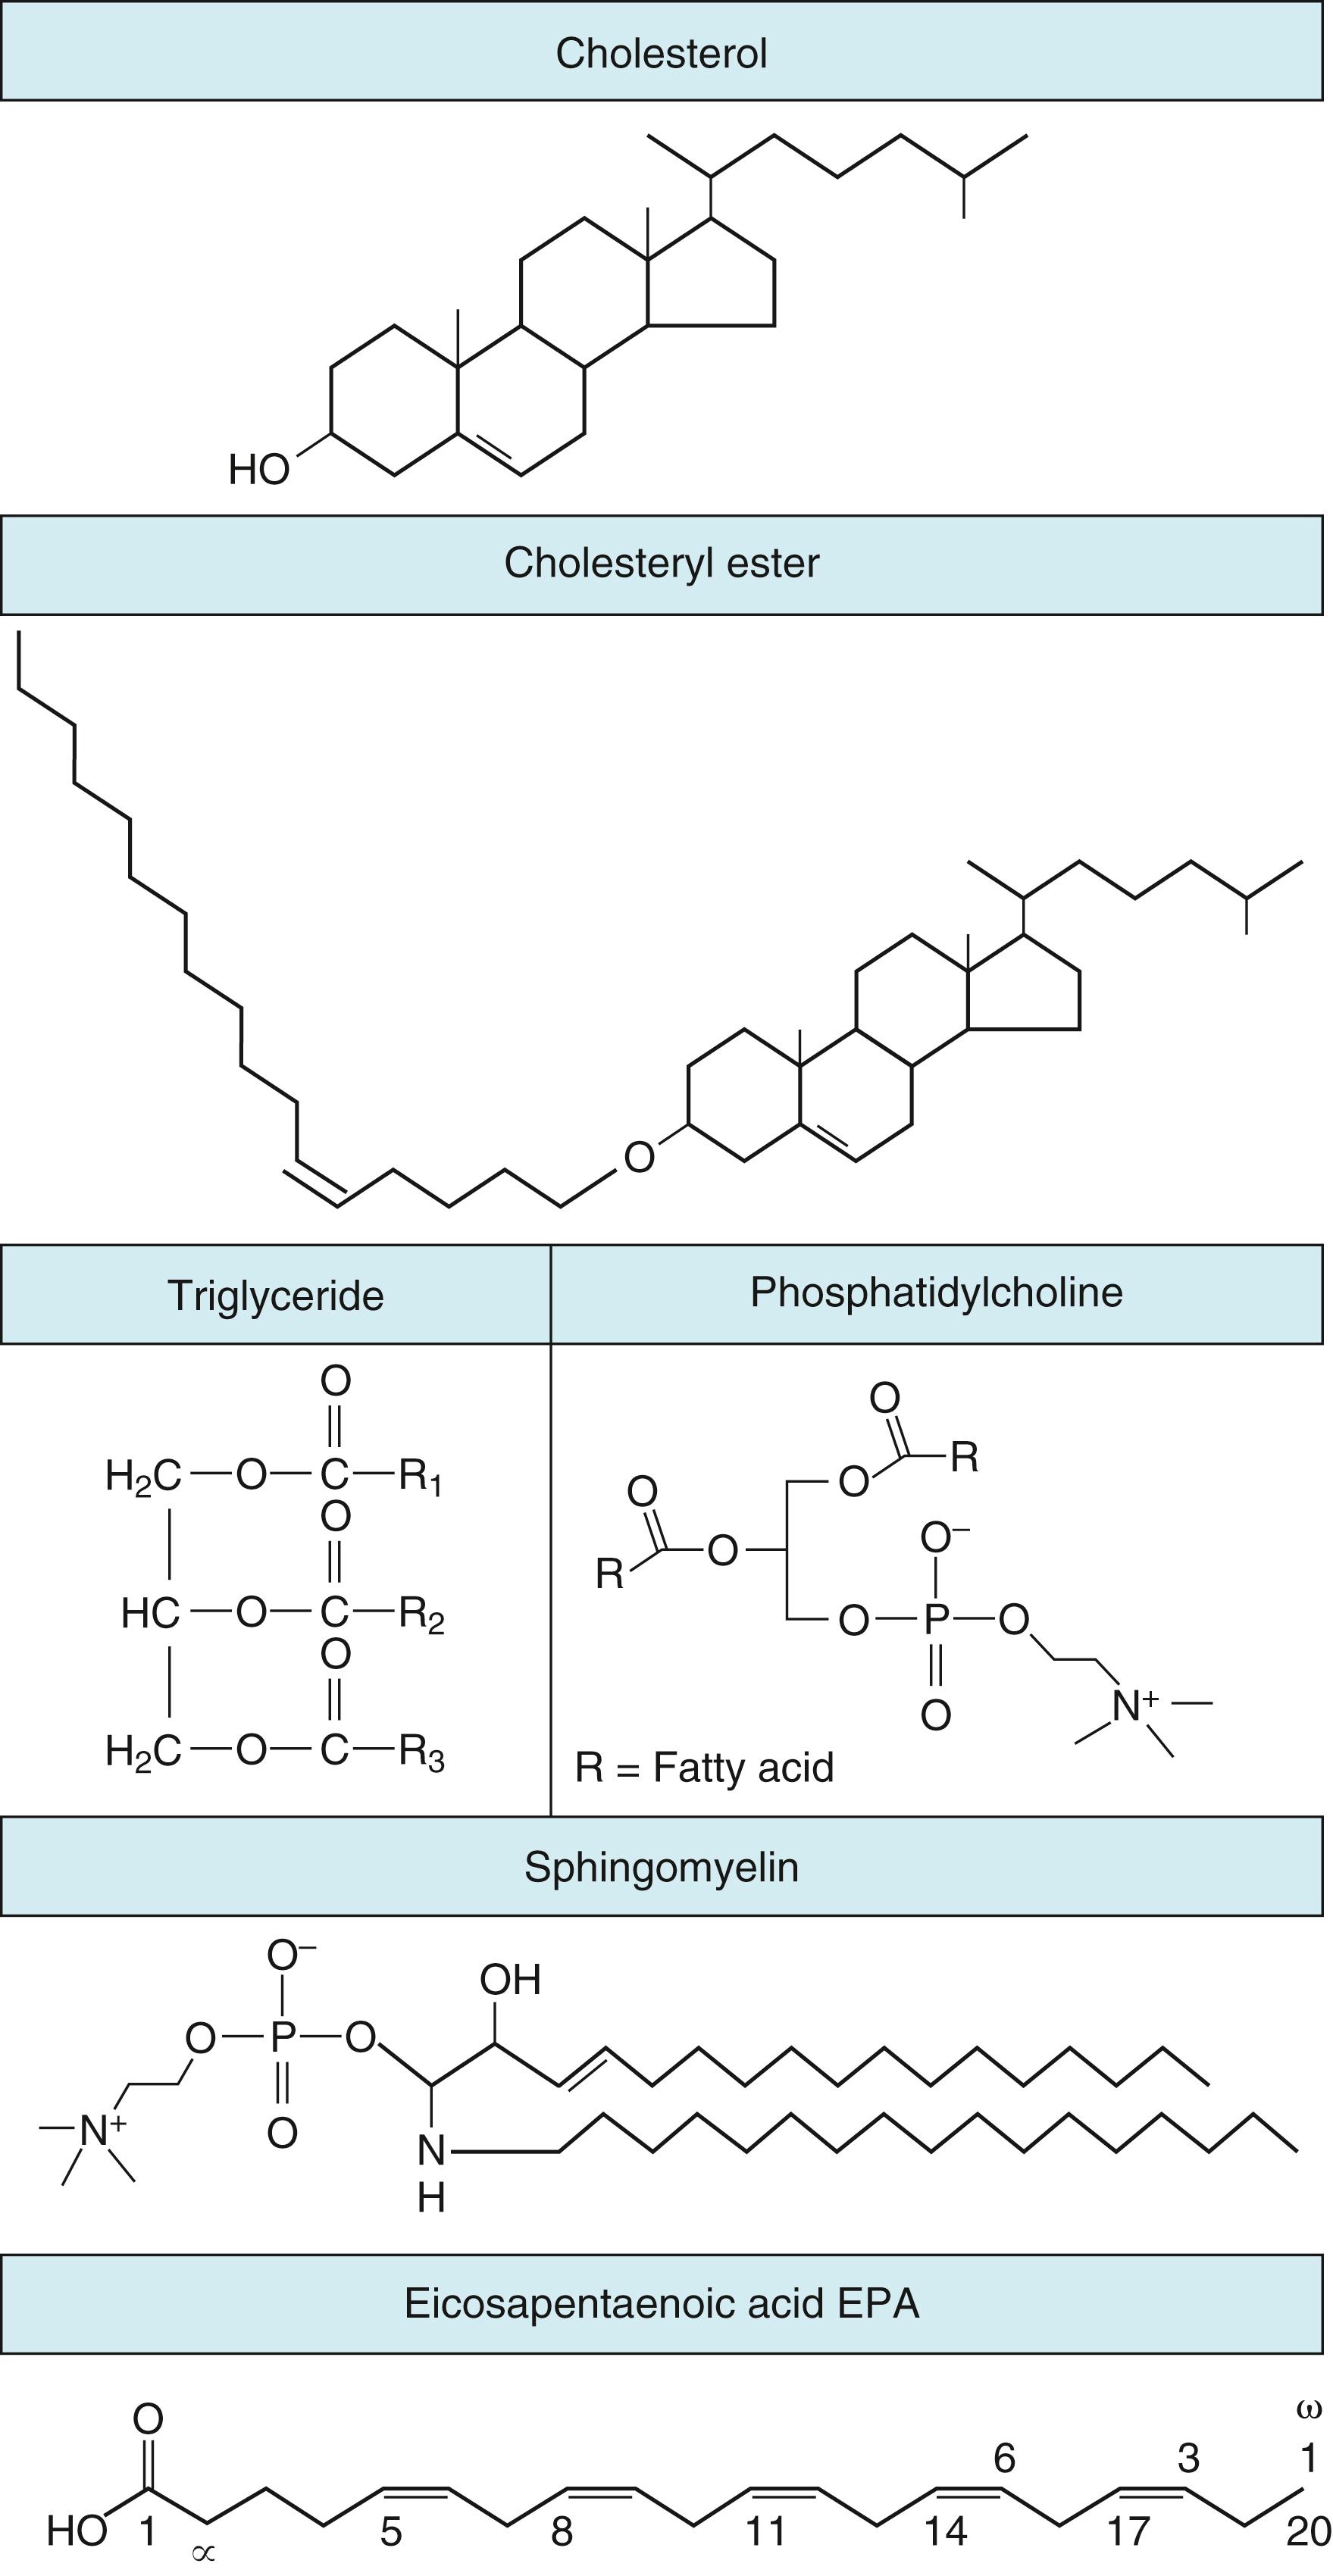 FIGURE 27.1, Biochemical structure of the major lipid molecules: cholesterol, cholesteryl esters, glycerolipids (triglycerides), and glycerophospholipids (e.g., phosphatidylcholine) and sphingomyelin. Eicosapentaenoic acid (EPA) is an essential polyunsaturated fatty acid. R indicates a fatty acyl chain.